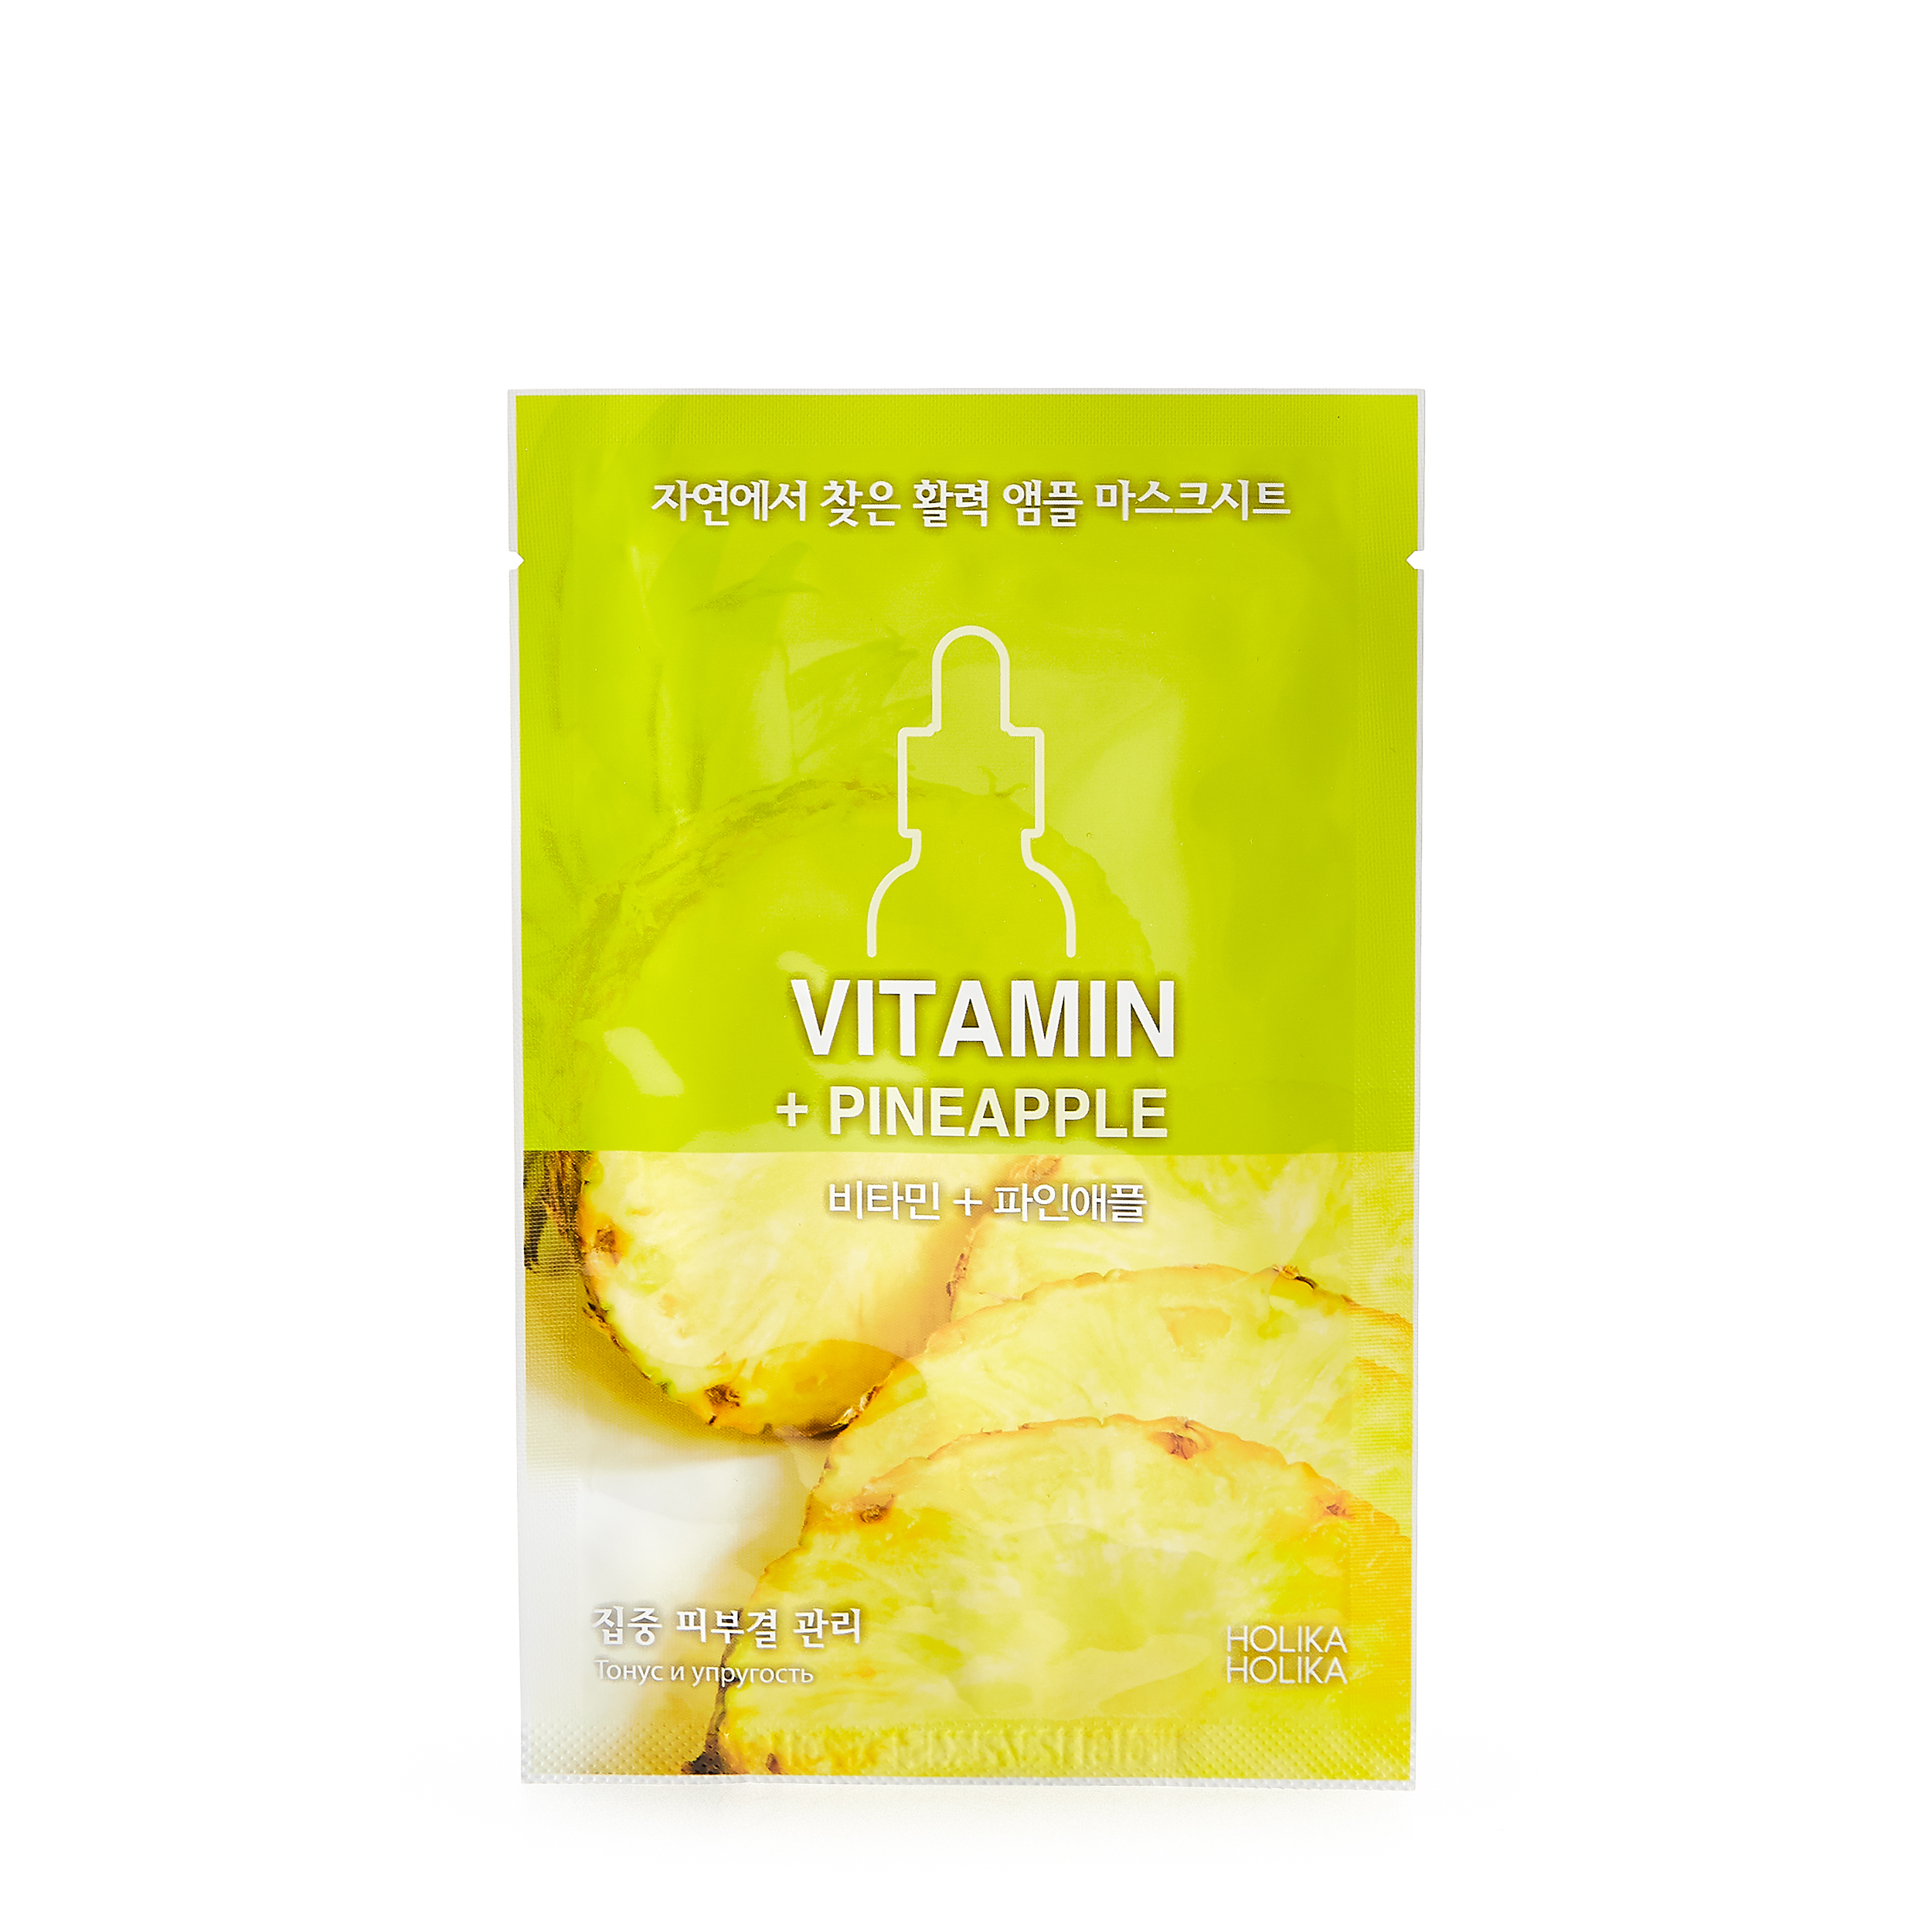 Holika Holika Holika Holika Тканевая маска для лица Тонус и упругость Vitamin + Pineapple 1 шт